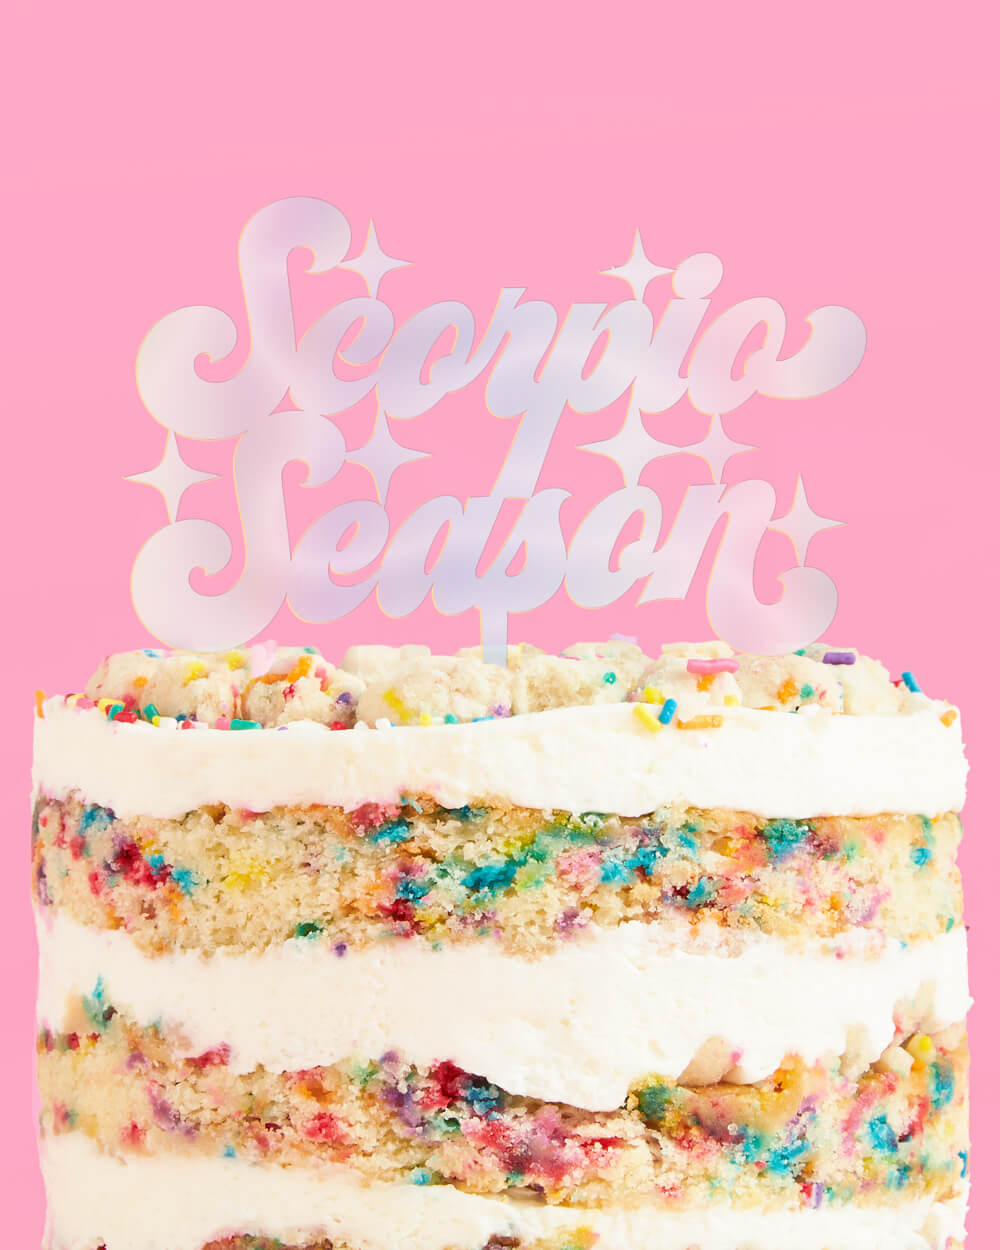 Scorpio Season Topper - acrylic cake topper